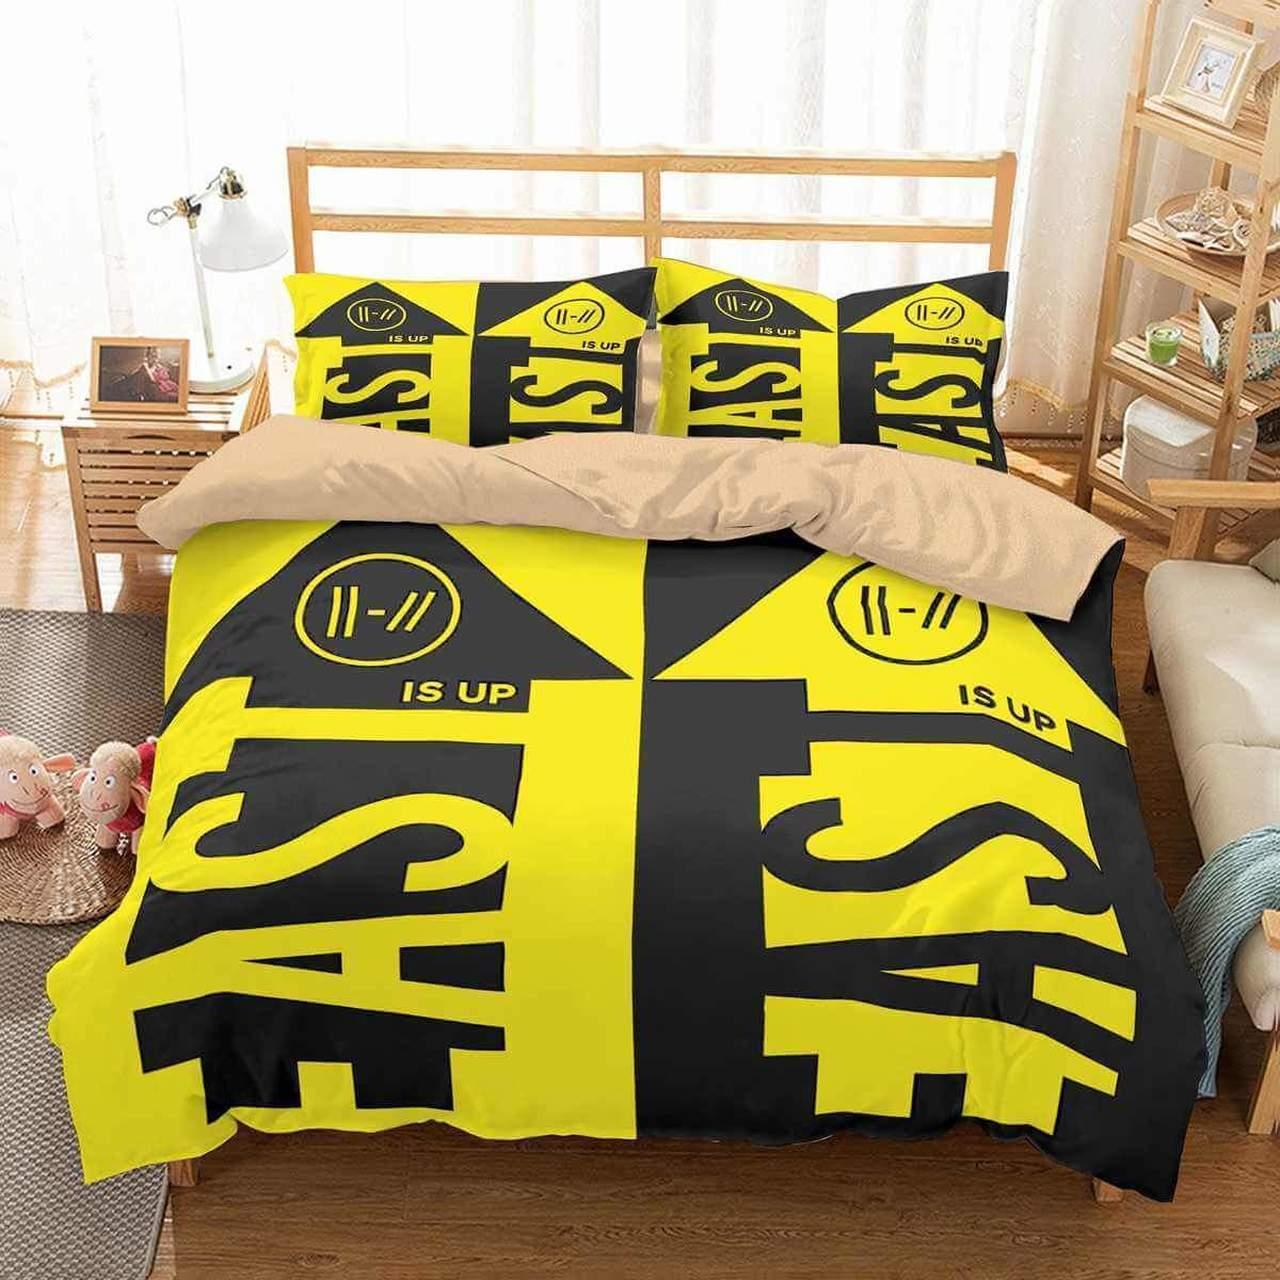 Yellow And Black Style Twenty One Pilots Bedding Set